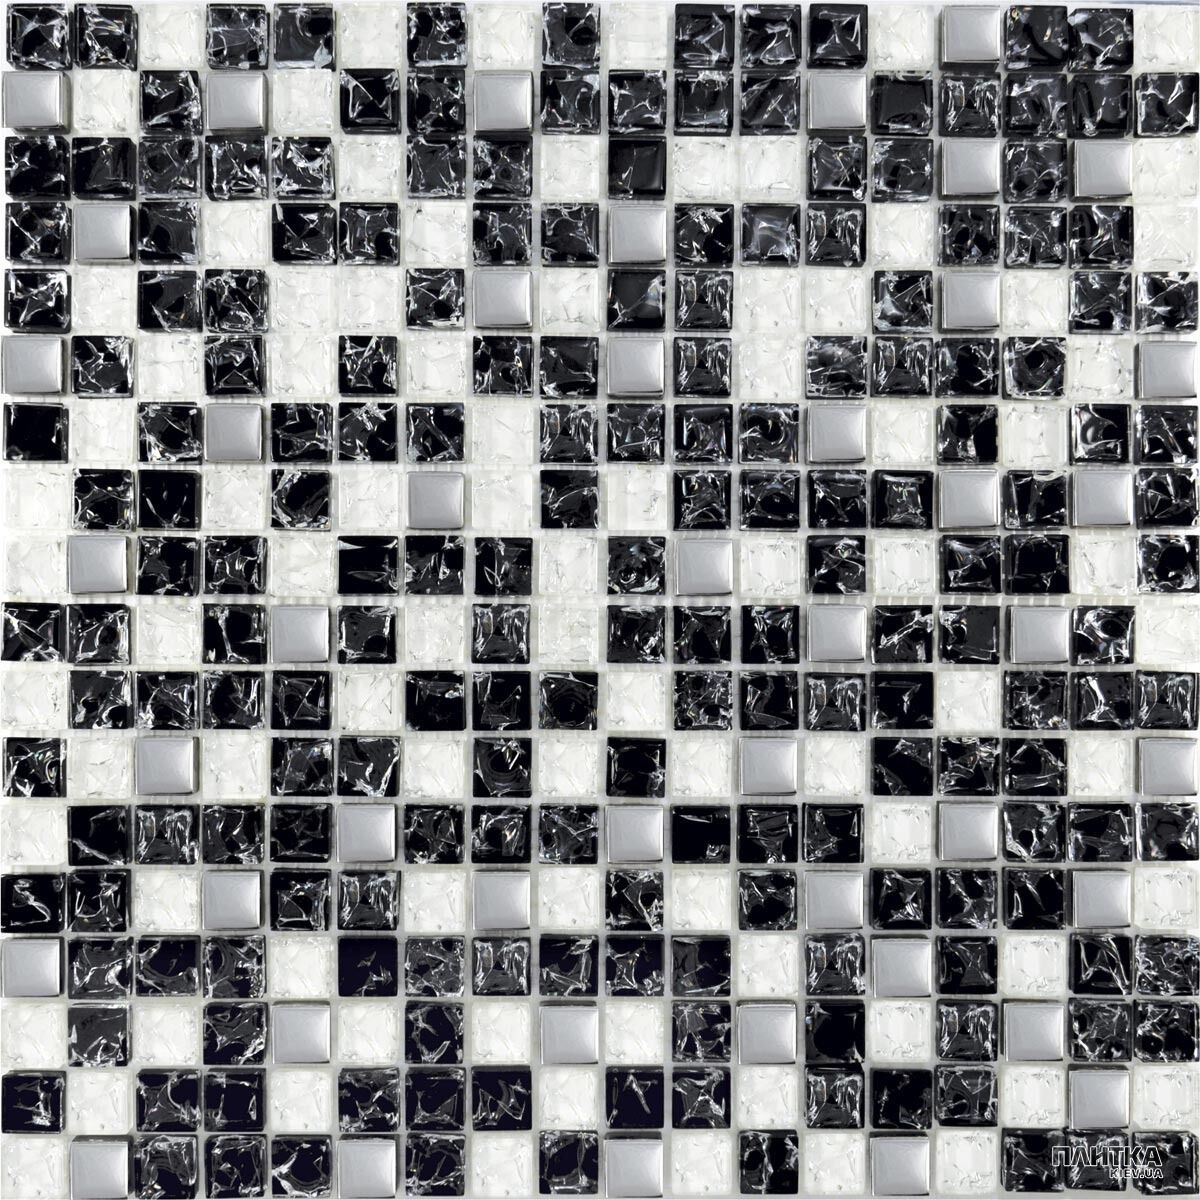 Мозаика Grand Kerama 503-Микс (черный колотый-белый колотый-платина) белый,черный,платиновый